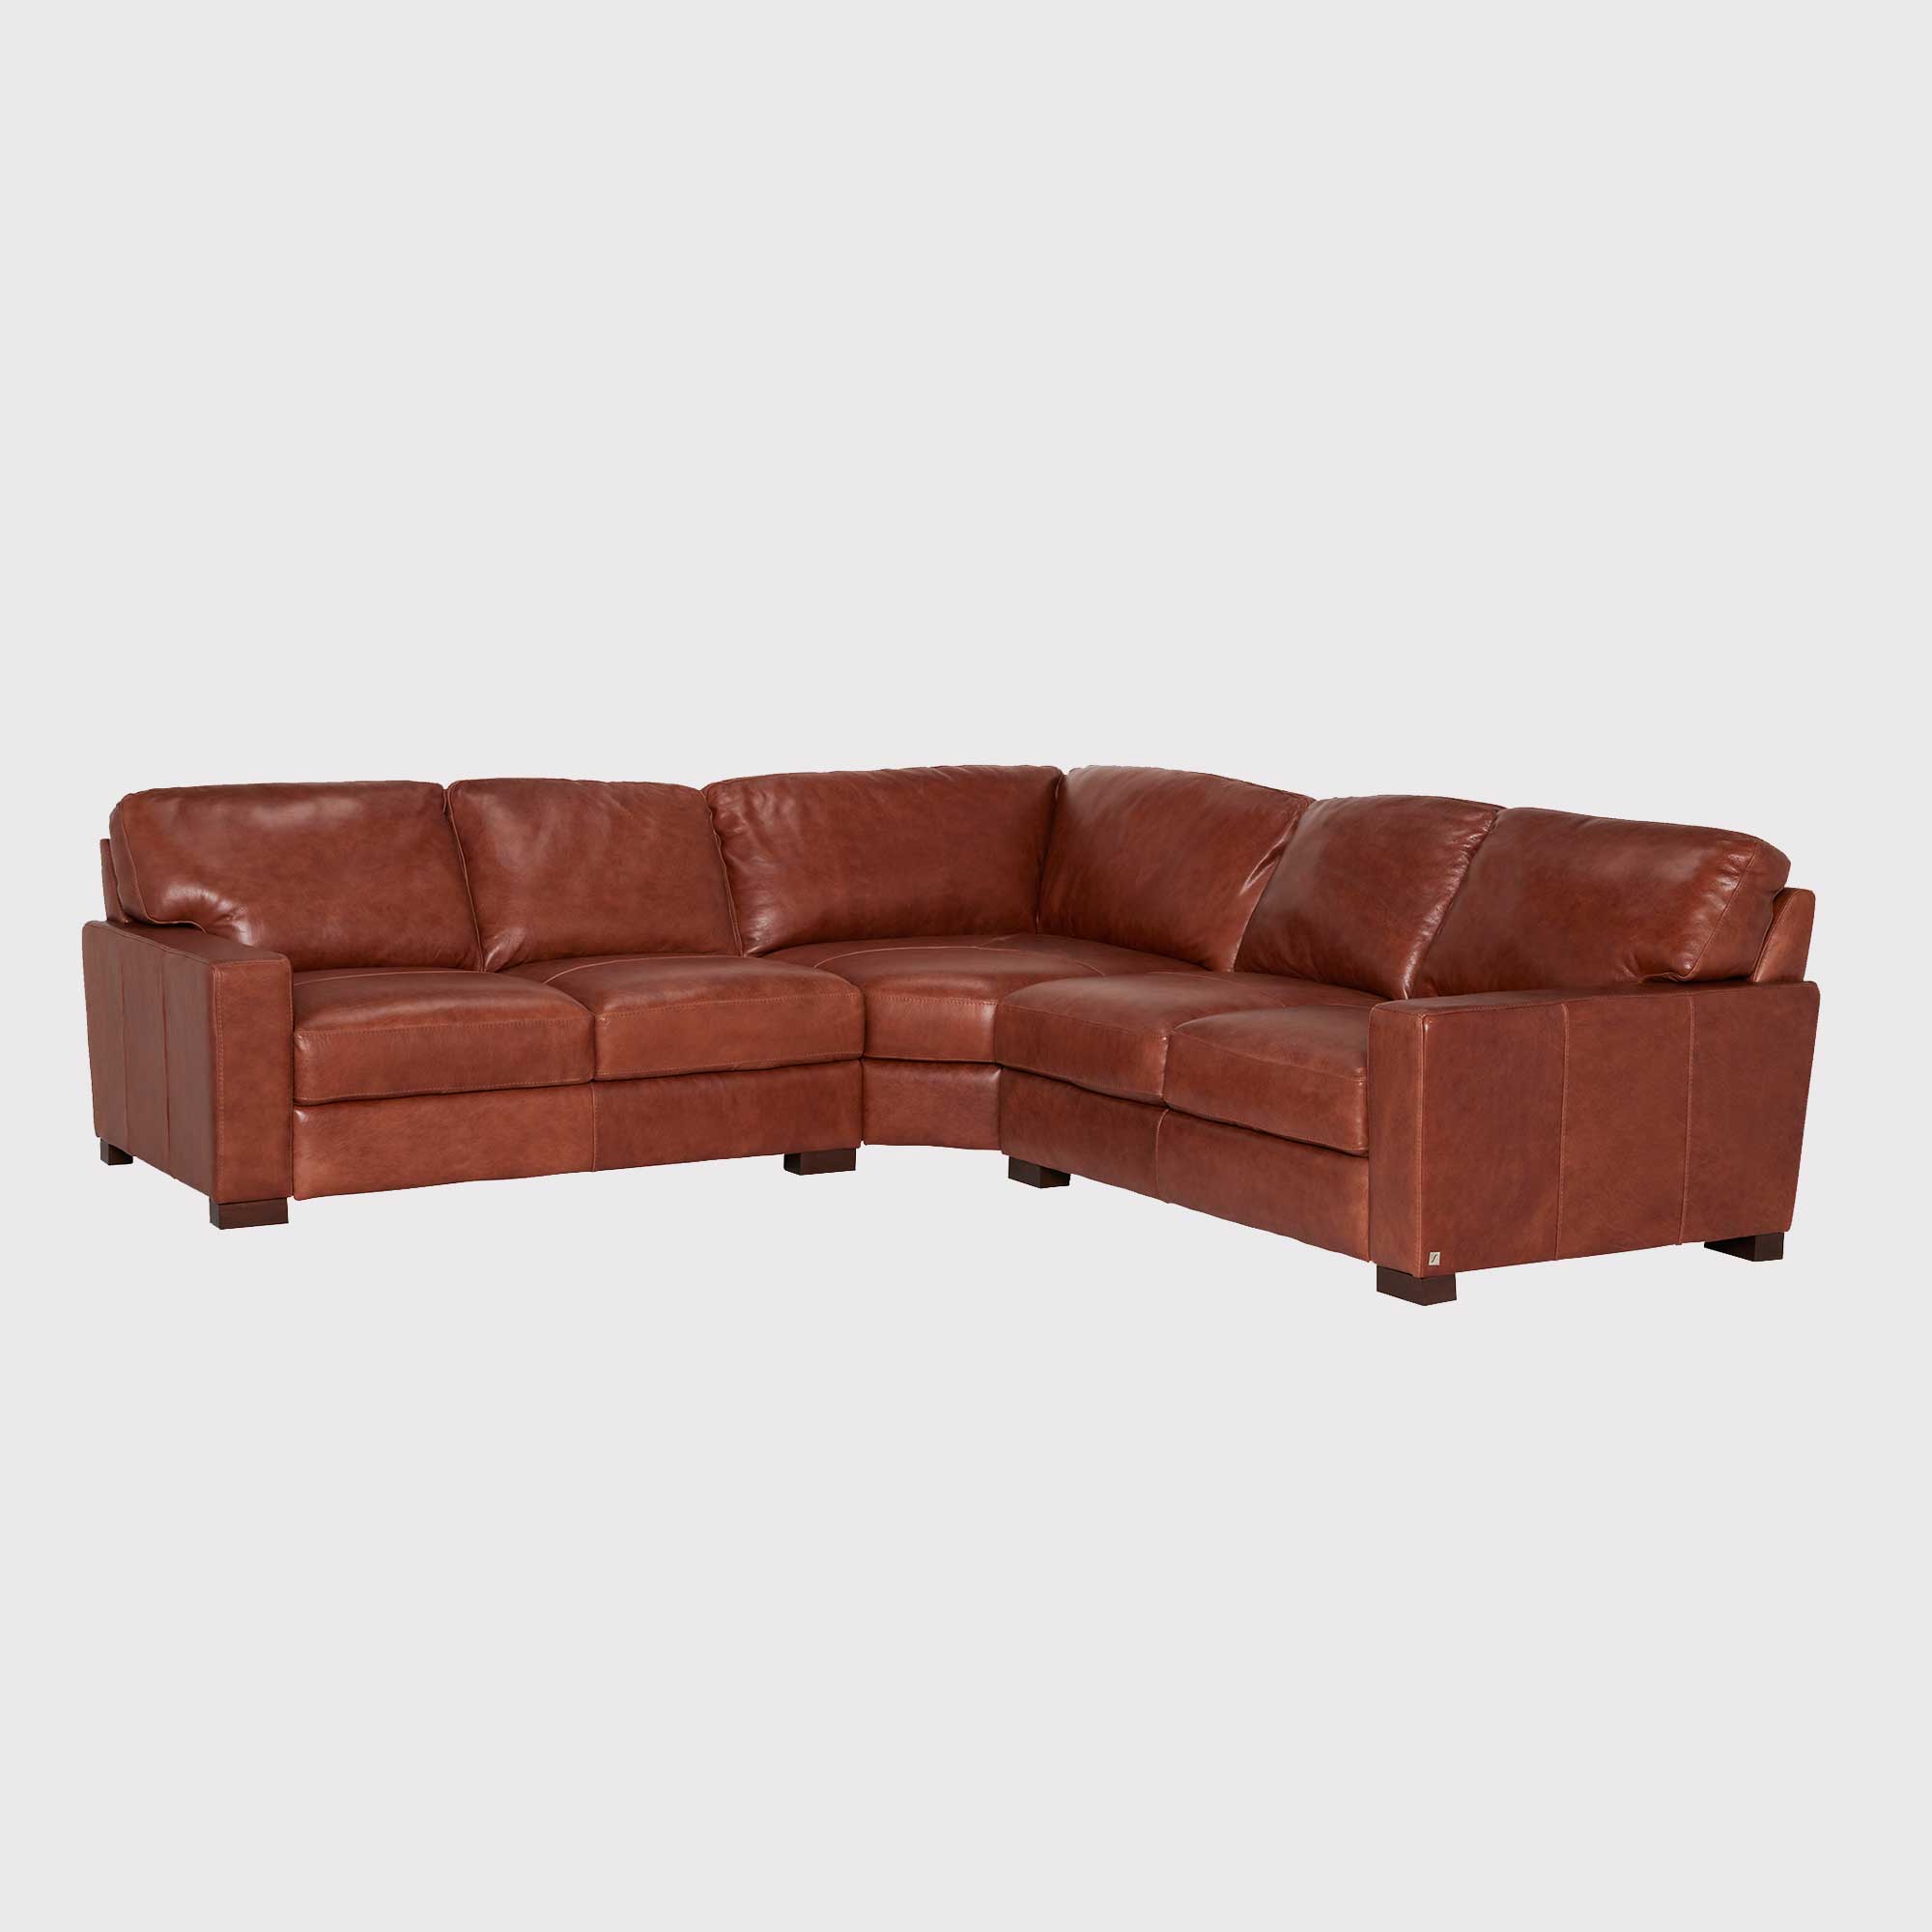 Lorenza Square Corner Group Sofa, Brown Leather | Barker & Stonehouse